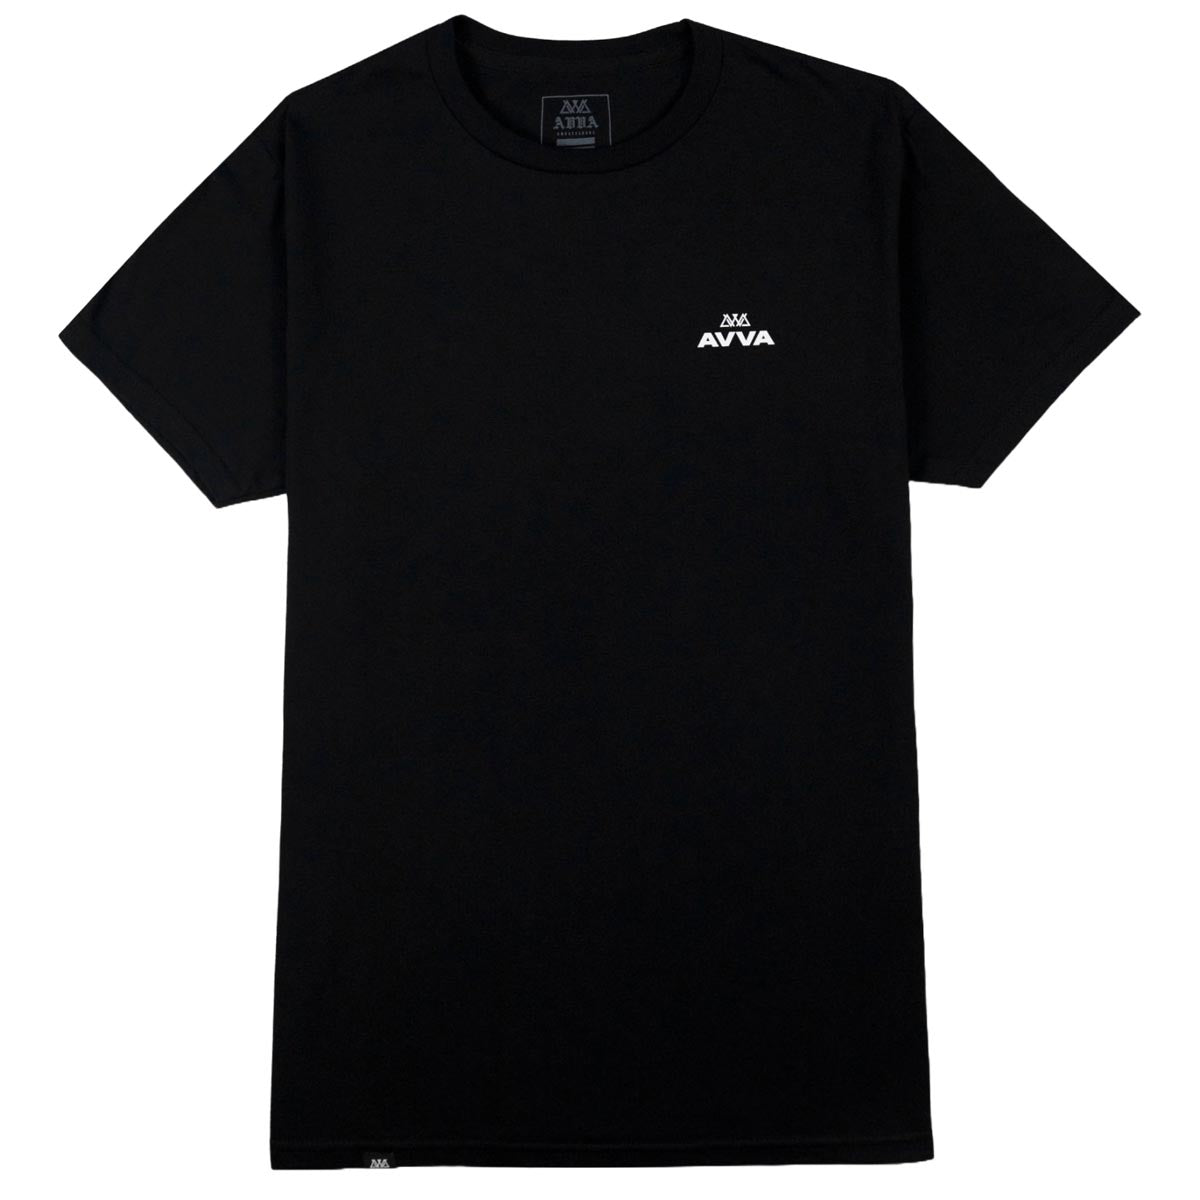 AVVA Pyramid Logo T-Shirt - Black image 2